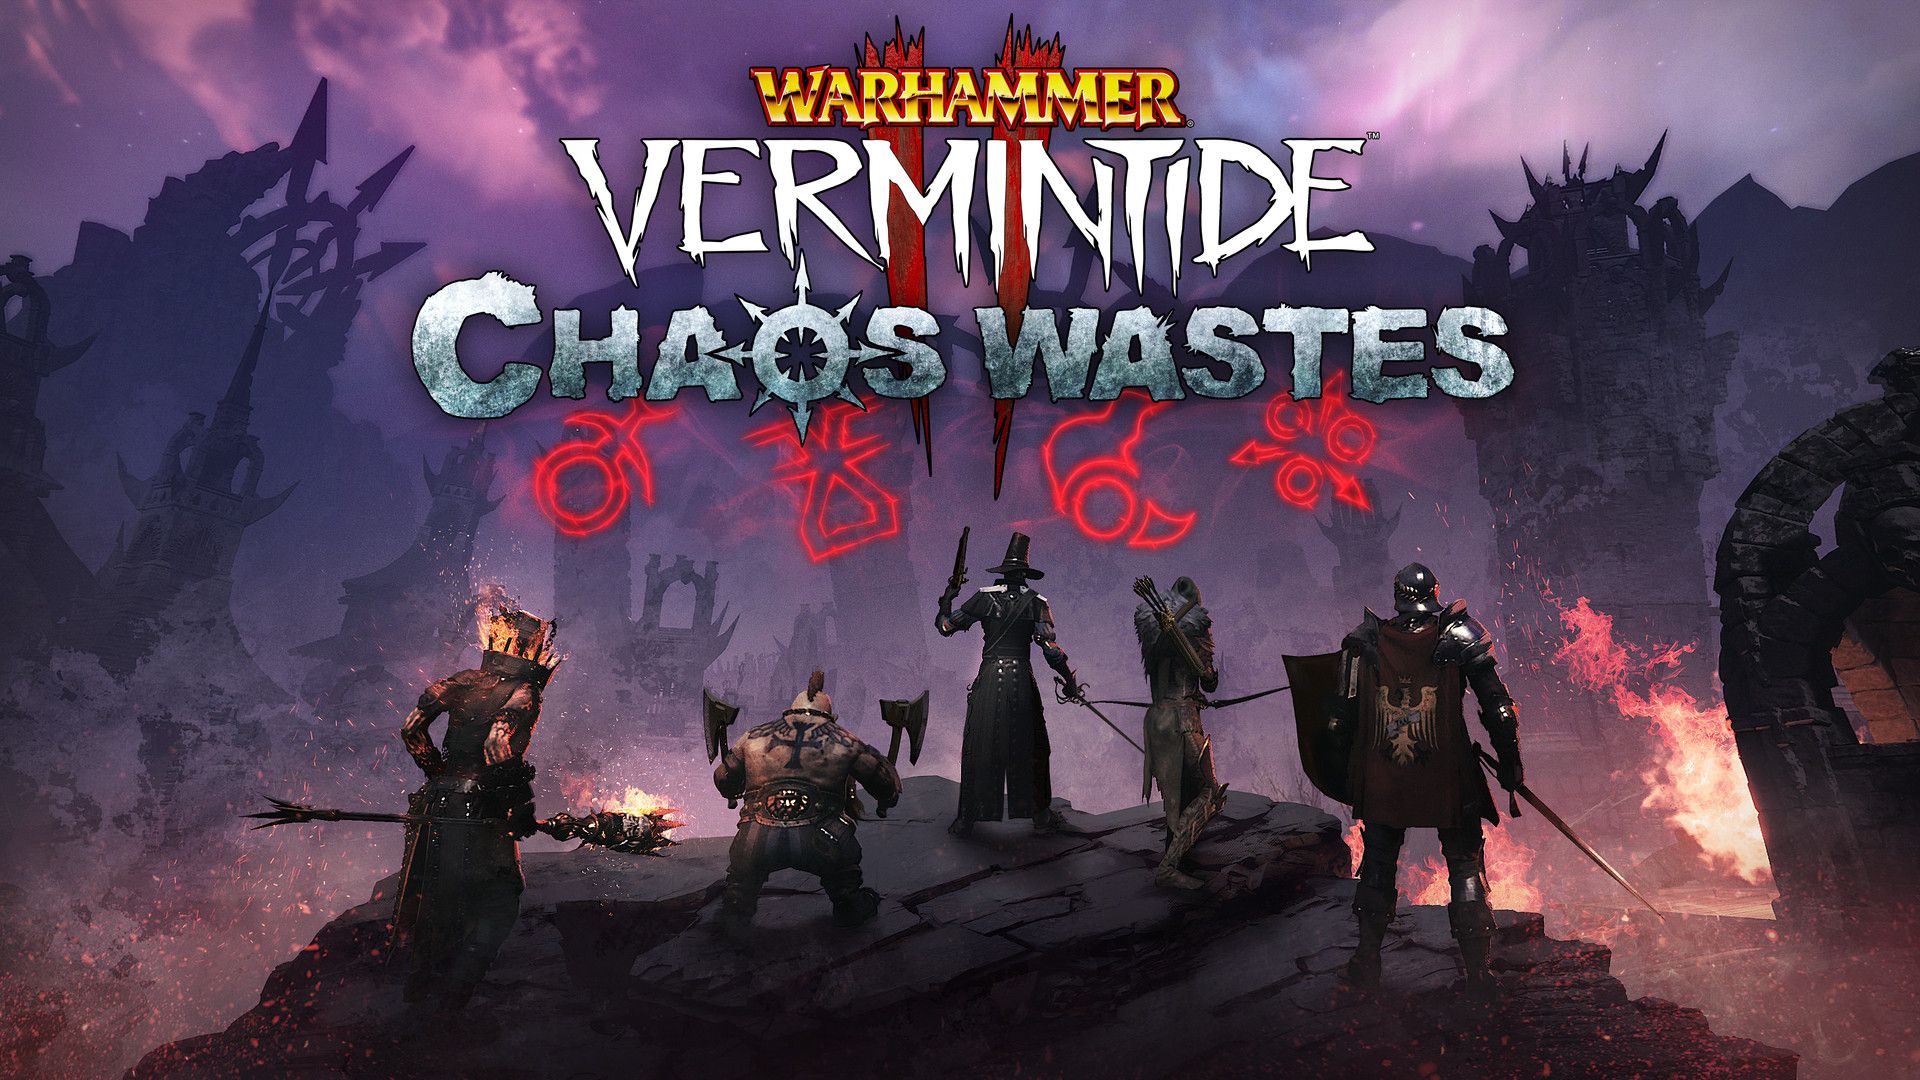 Vermintide 2 Chaos Waste Update